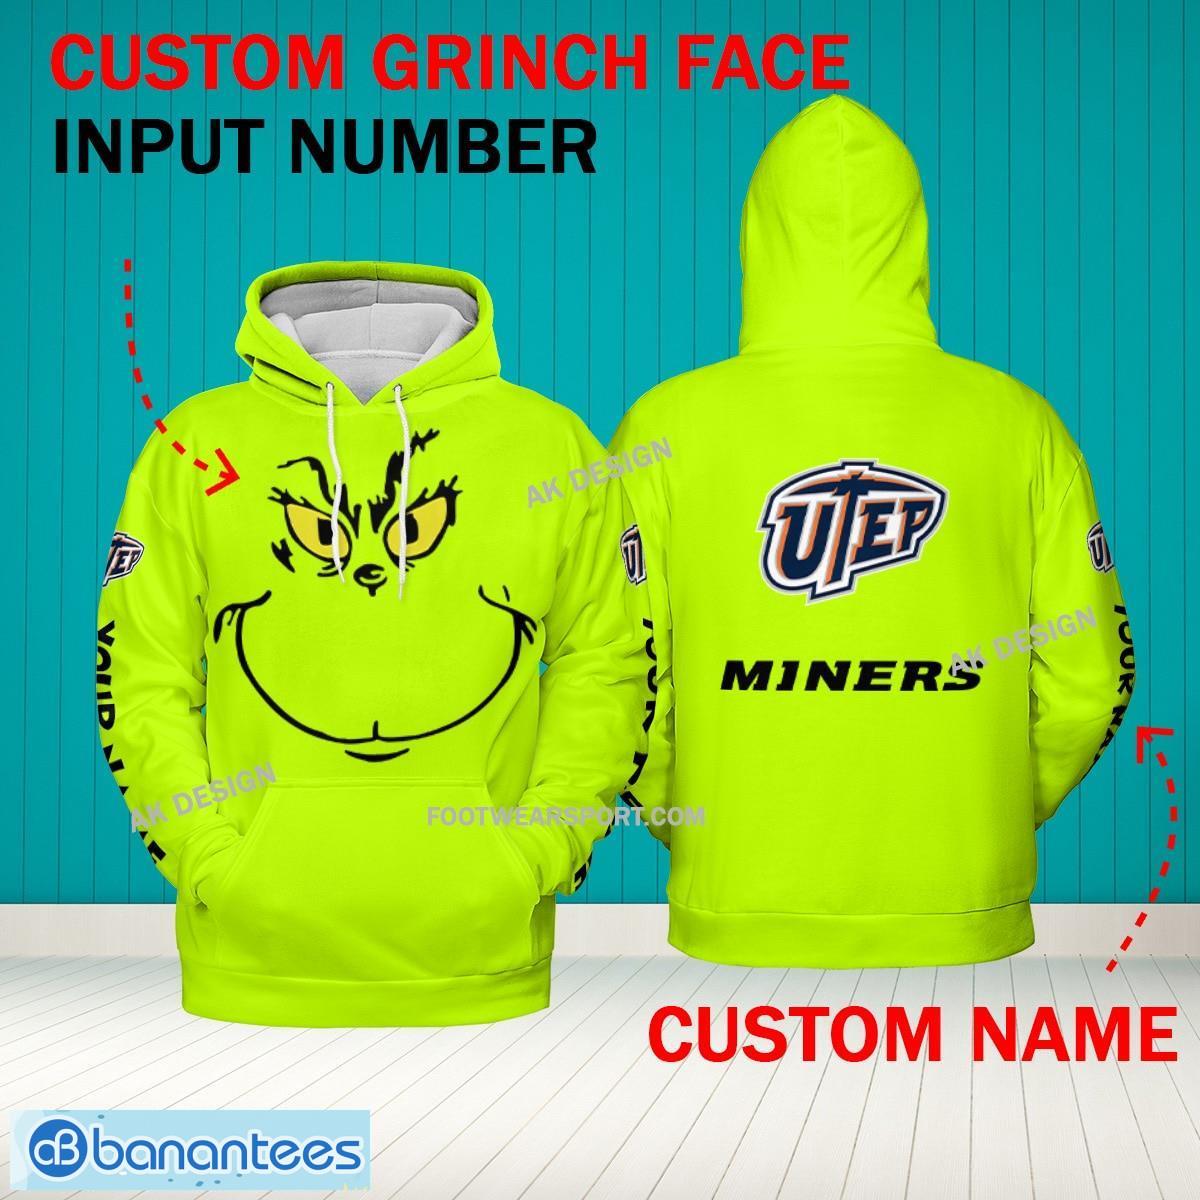 Grinch Face UTEP Miners 3D Hoodie, Zip Hoodie, Sweater Green AOP Custom Number And Name - Grinch Face NCAA UTEP Miners 3D Hoodie